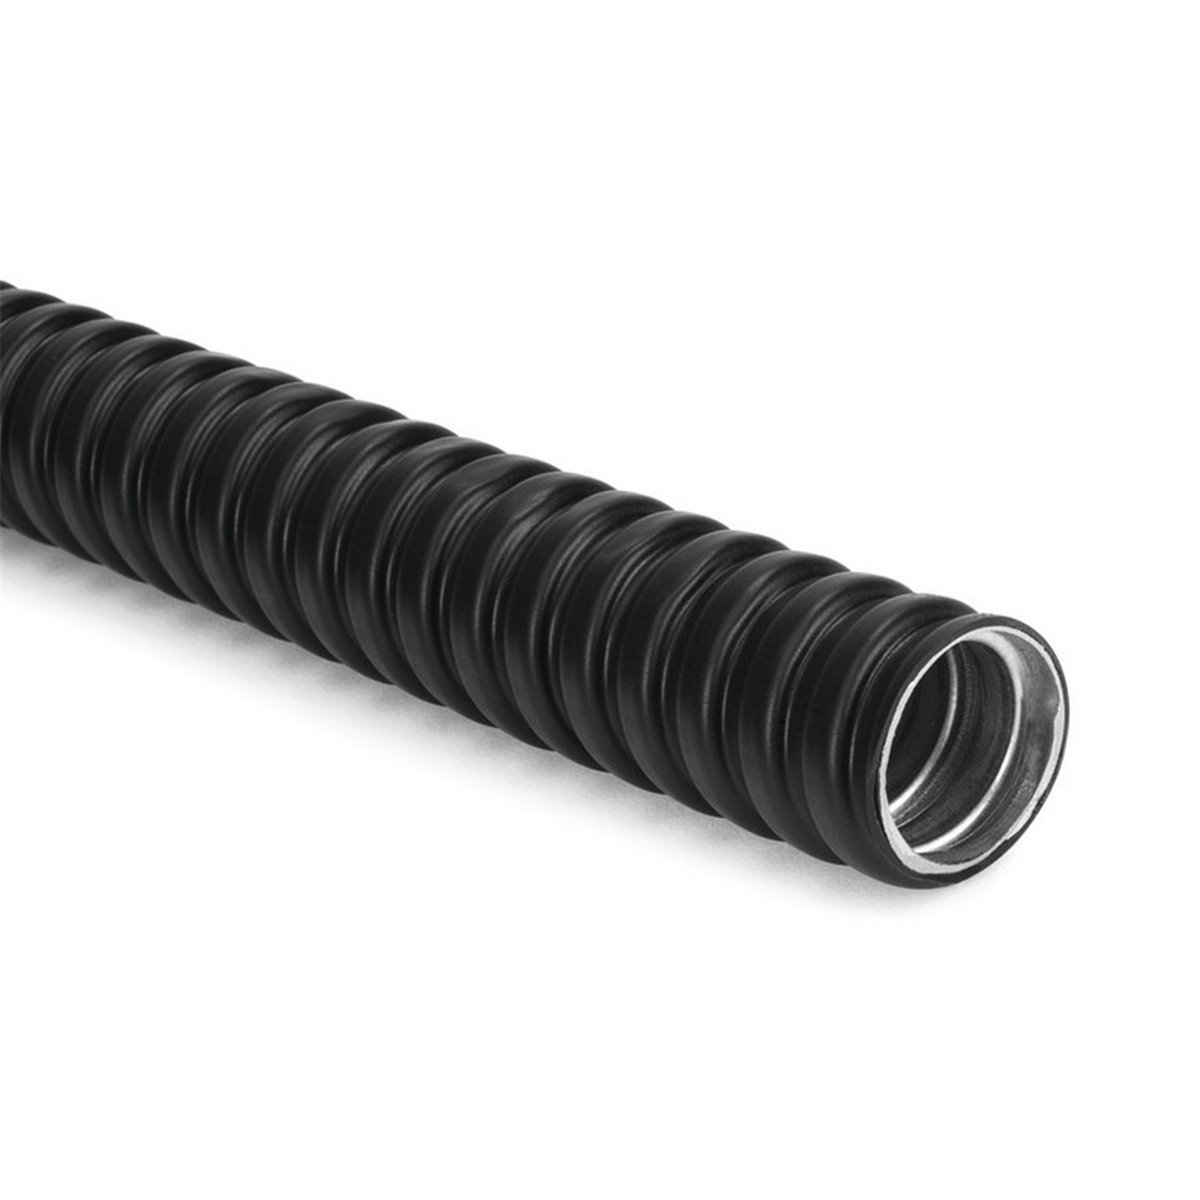 Galvanised steel conduit with PVC coating PCS12-GS/PVC-BK HellermannTyton, ⌀12mm, black, 50m